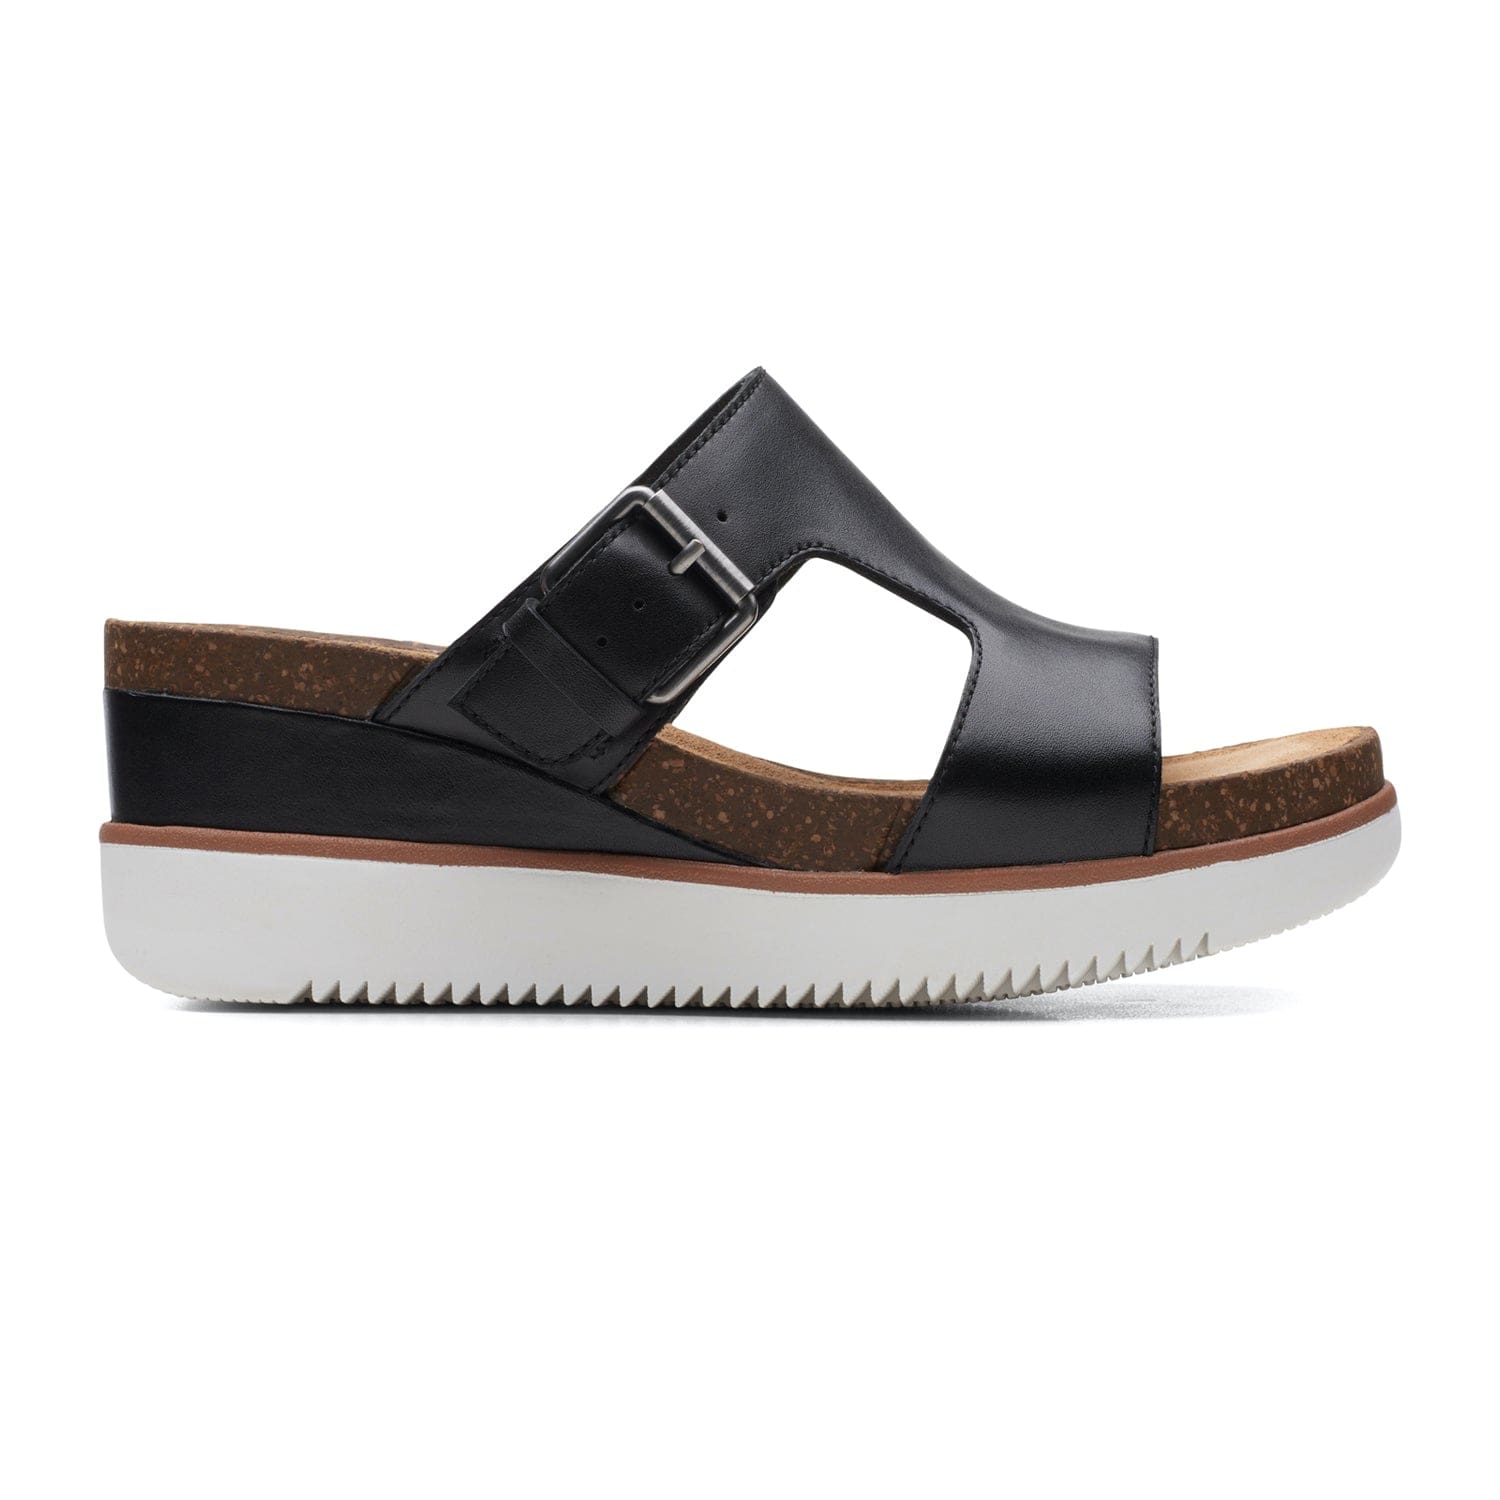 Clarks Lizby Ease Sandals - Black Leather - 261590404 - D Width (Standard Fit)